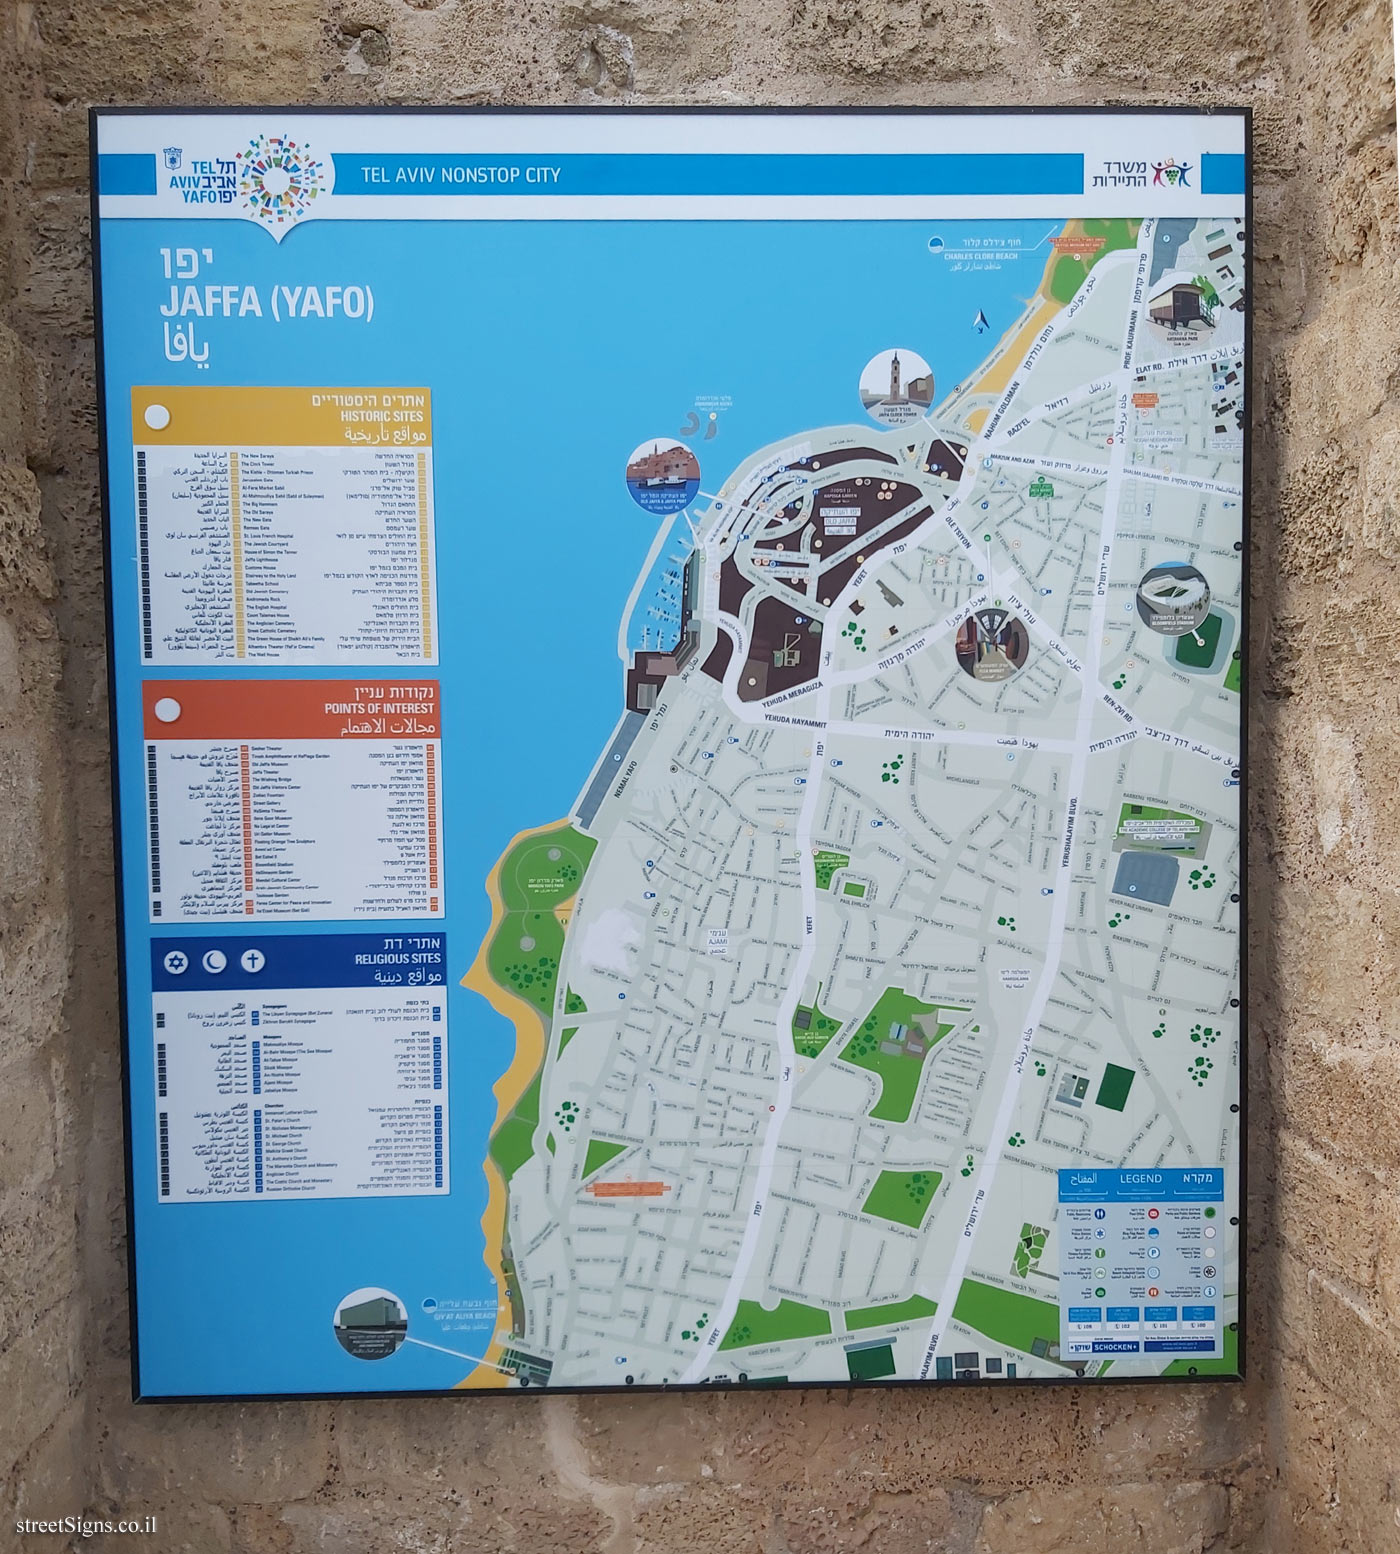 Tel Aviv - Map of Jaffa